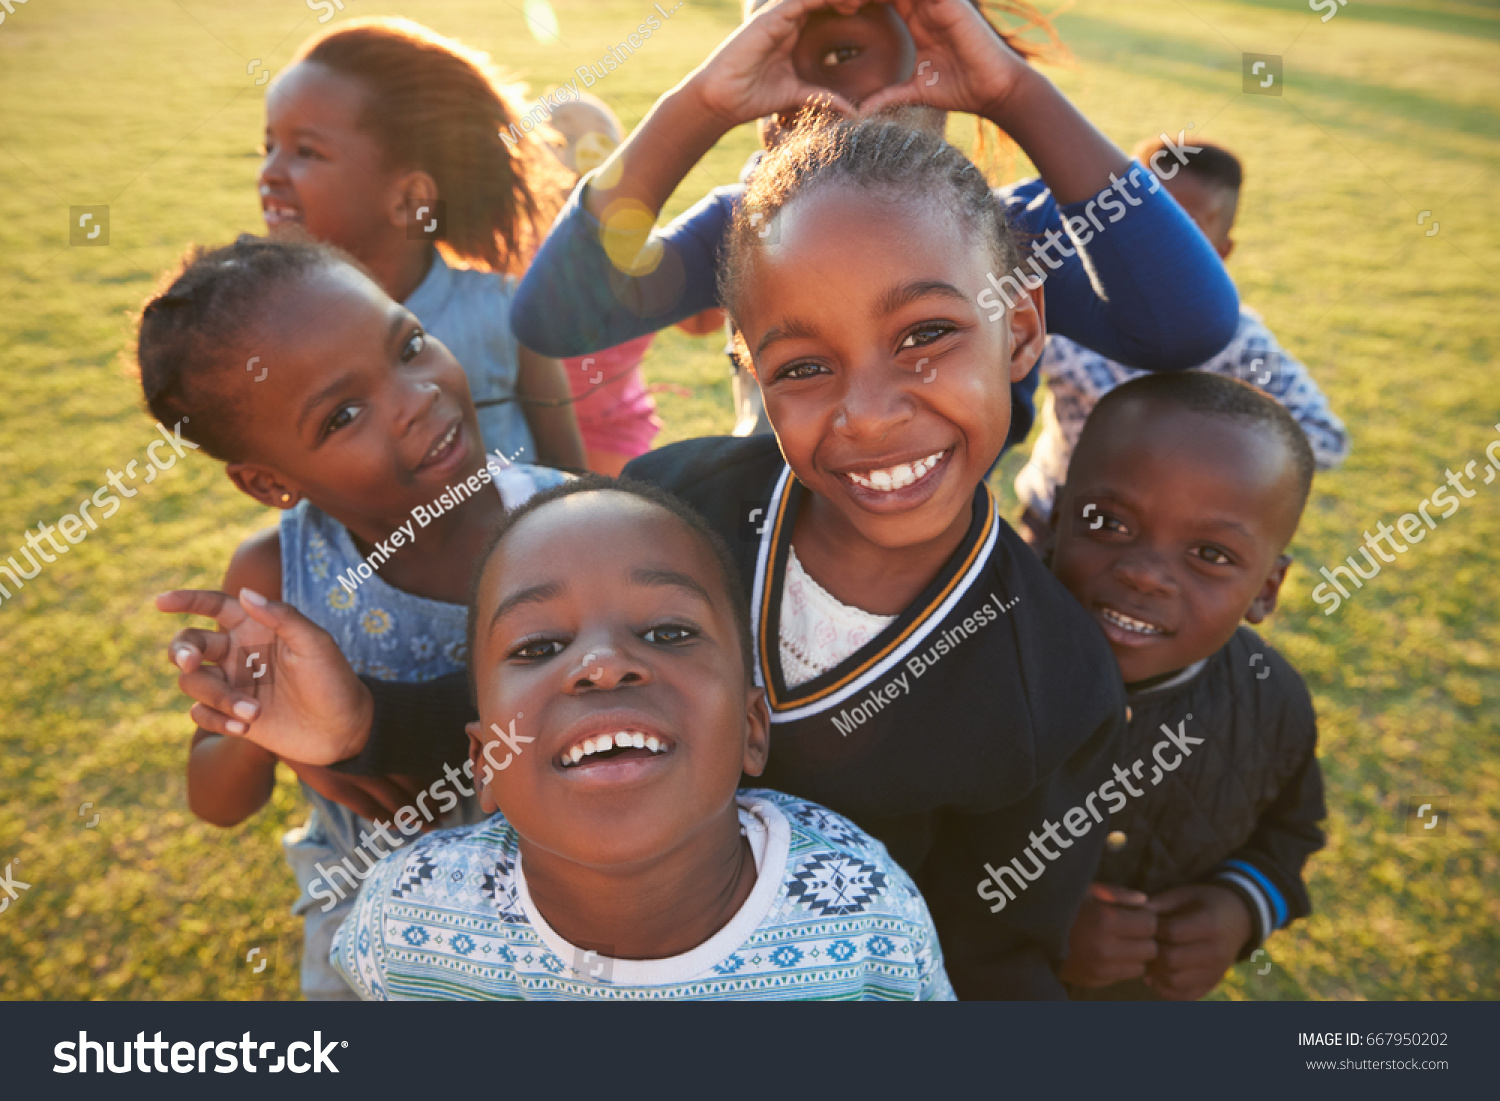 Elementary school kids having fun outdoors, high angle #667950202